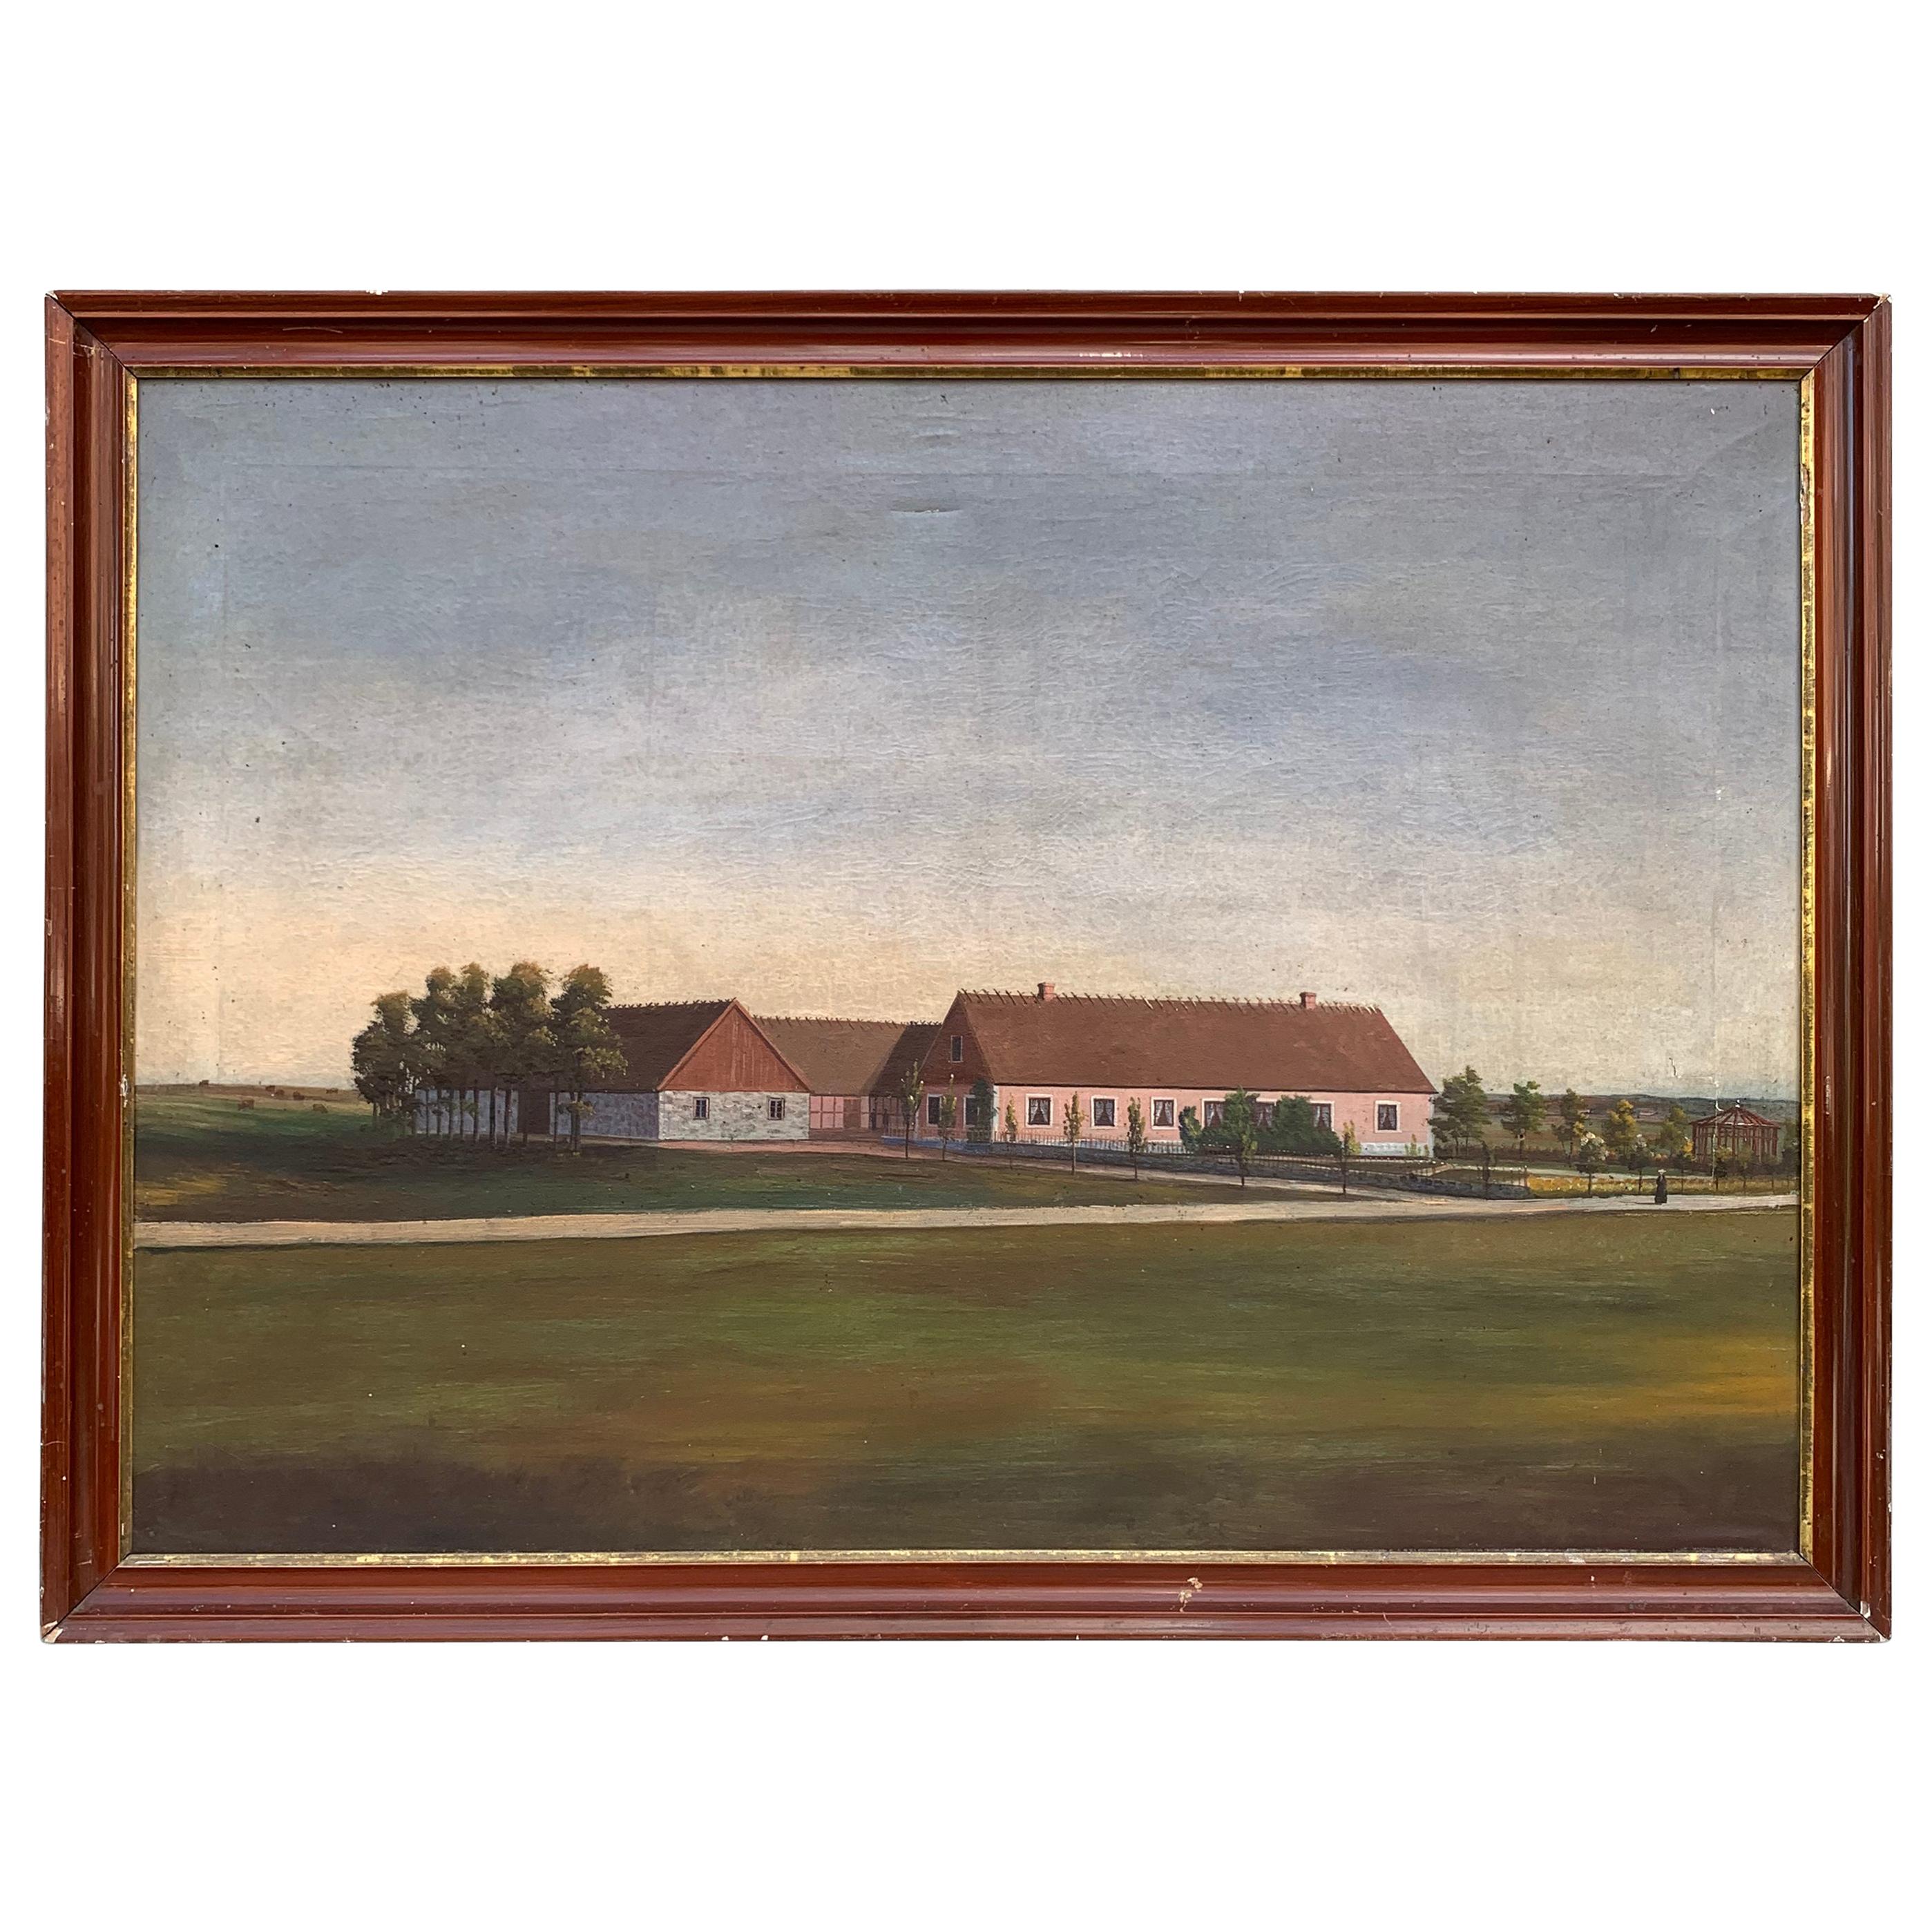 Mid-19th Century Fork Art Oil Painting of a Danish or Swedish Farm